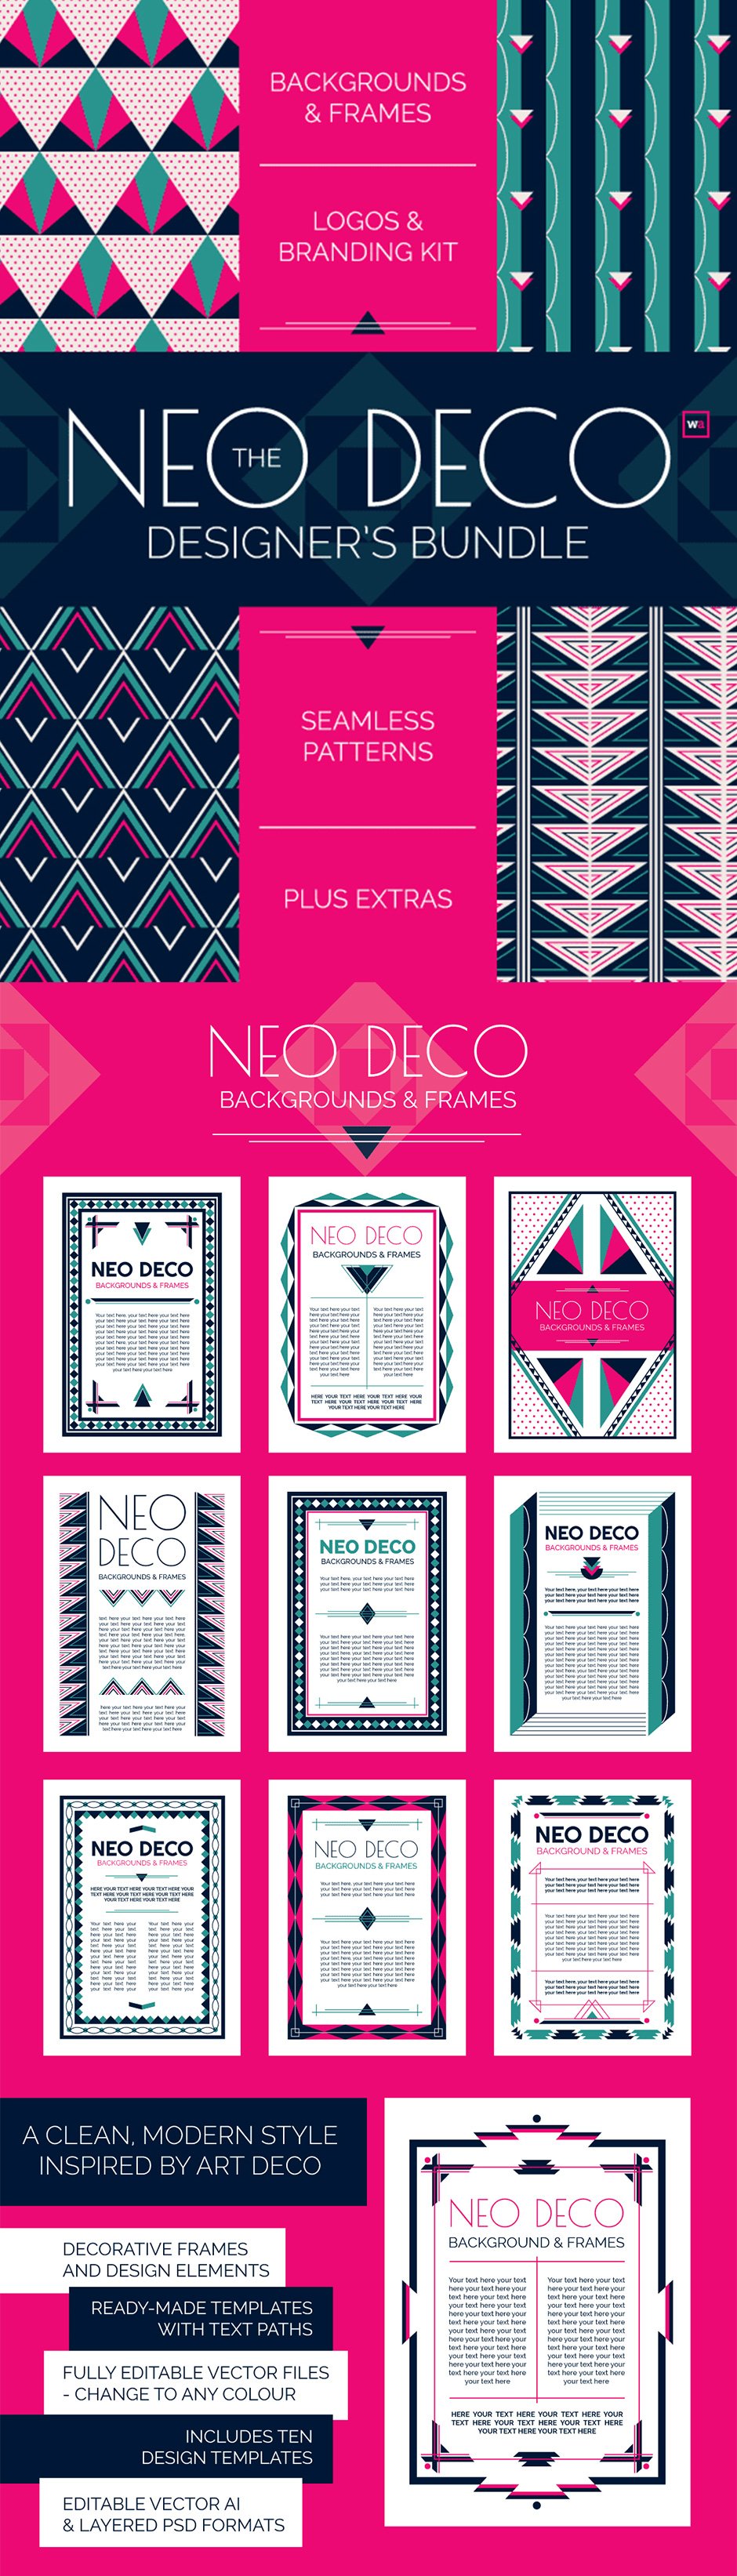 The Neo Deco Designers Bundle